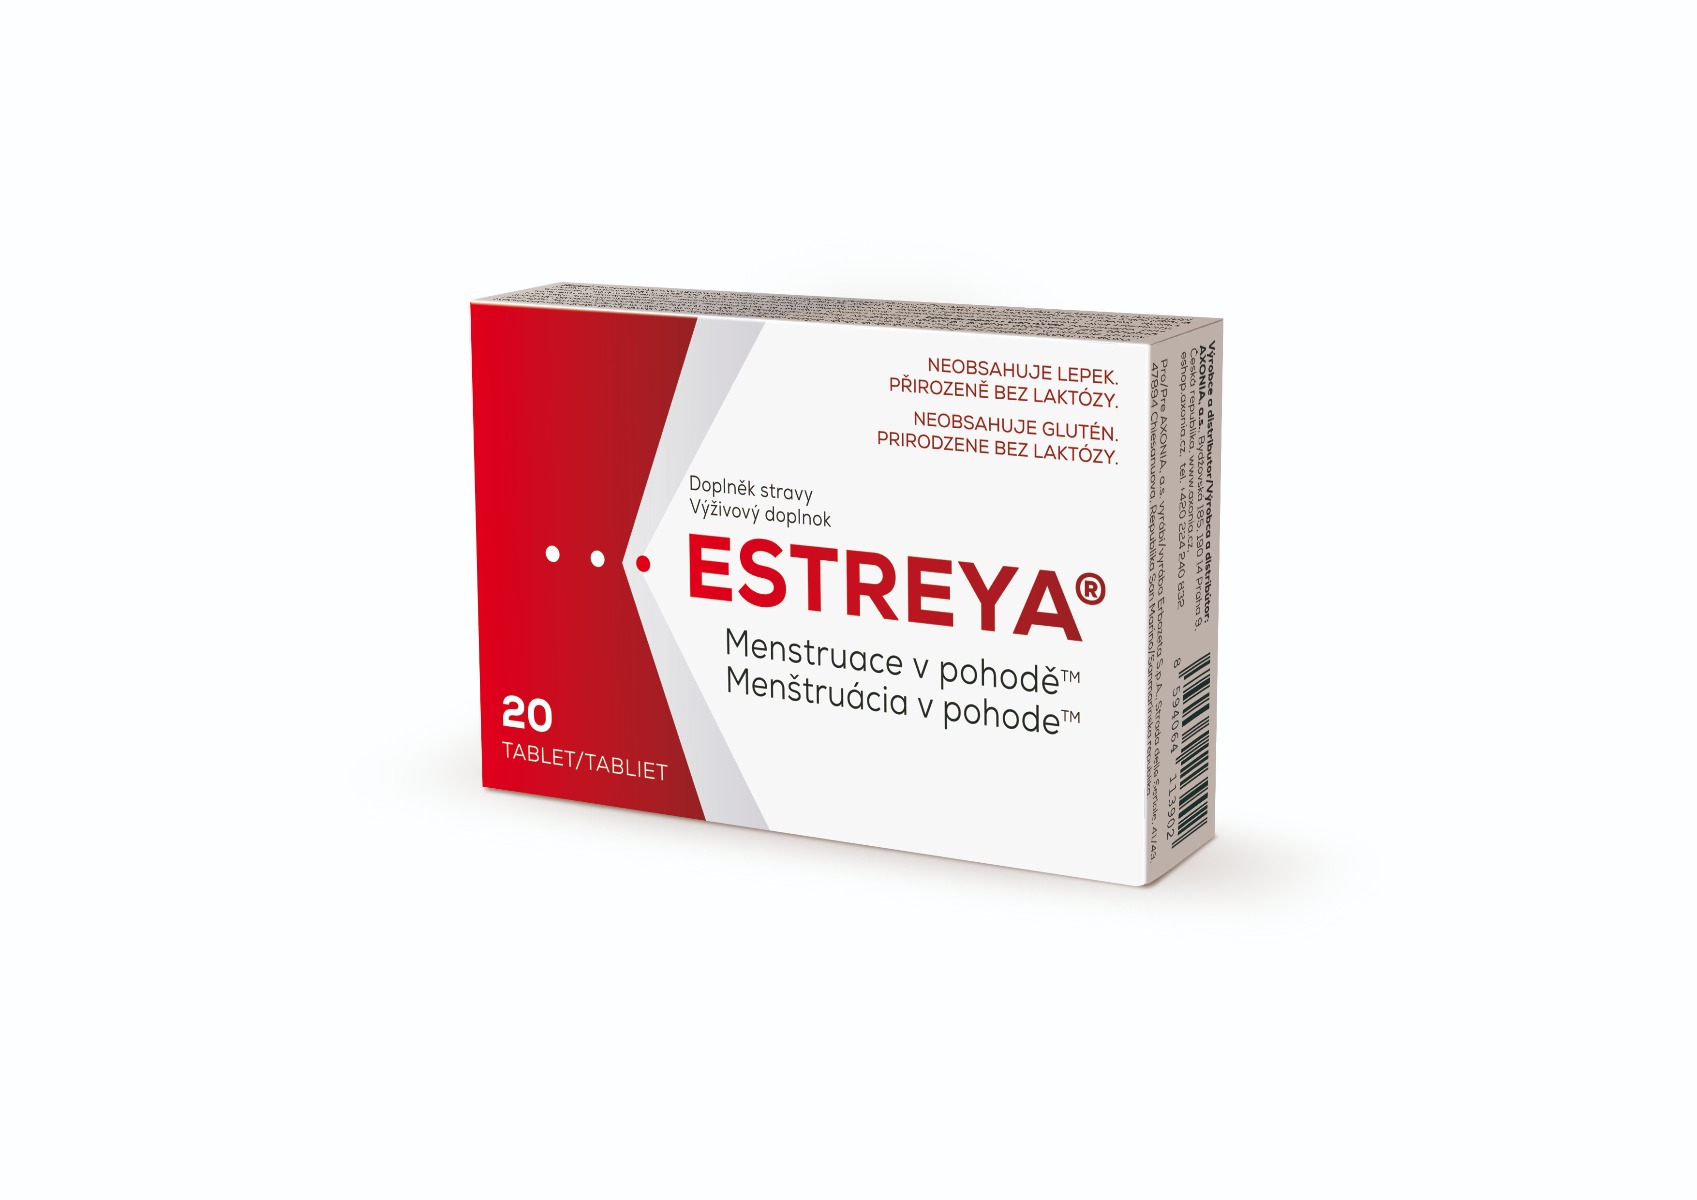 Estreya Menstruace v pohodě 20 tablet Estreya